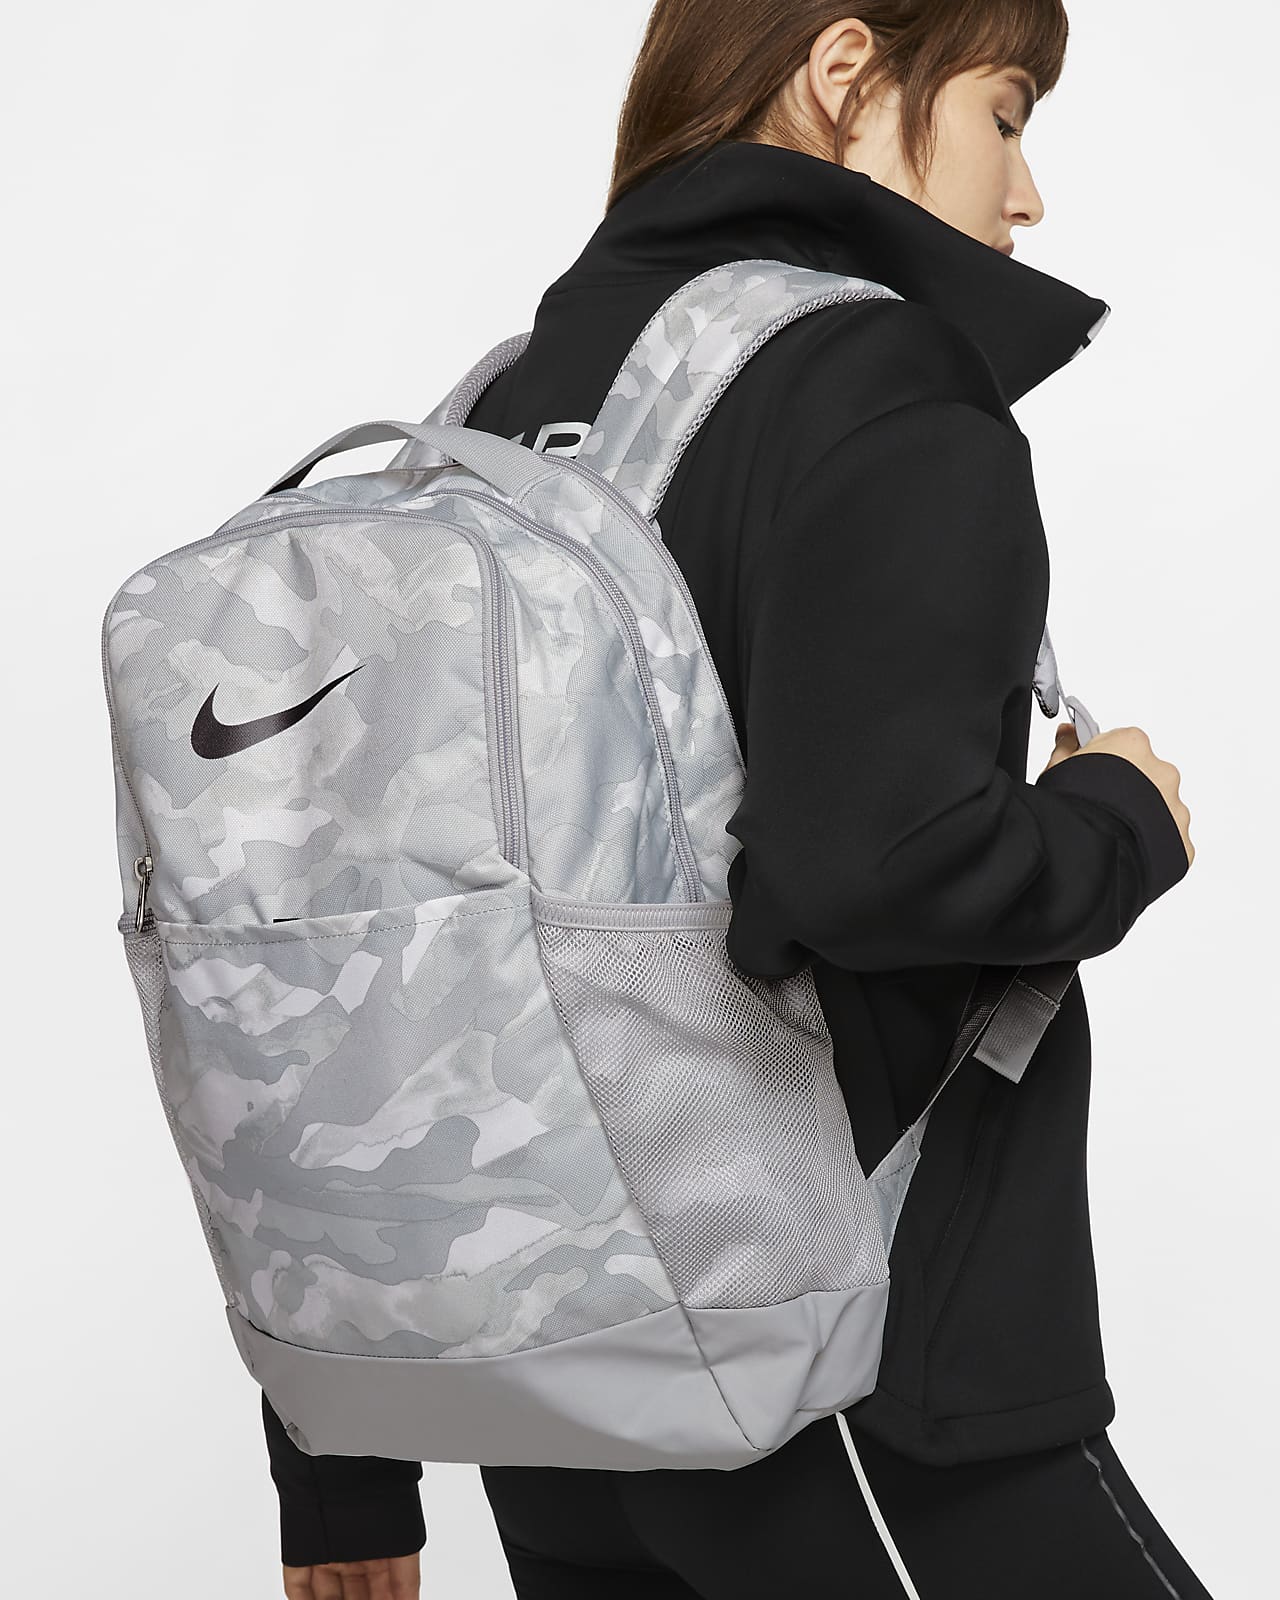 nike brasilia medium backpack 9.0